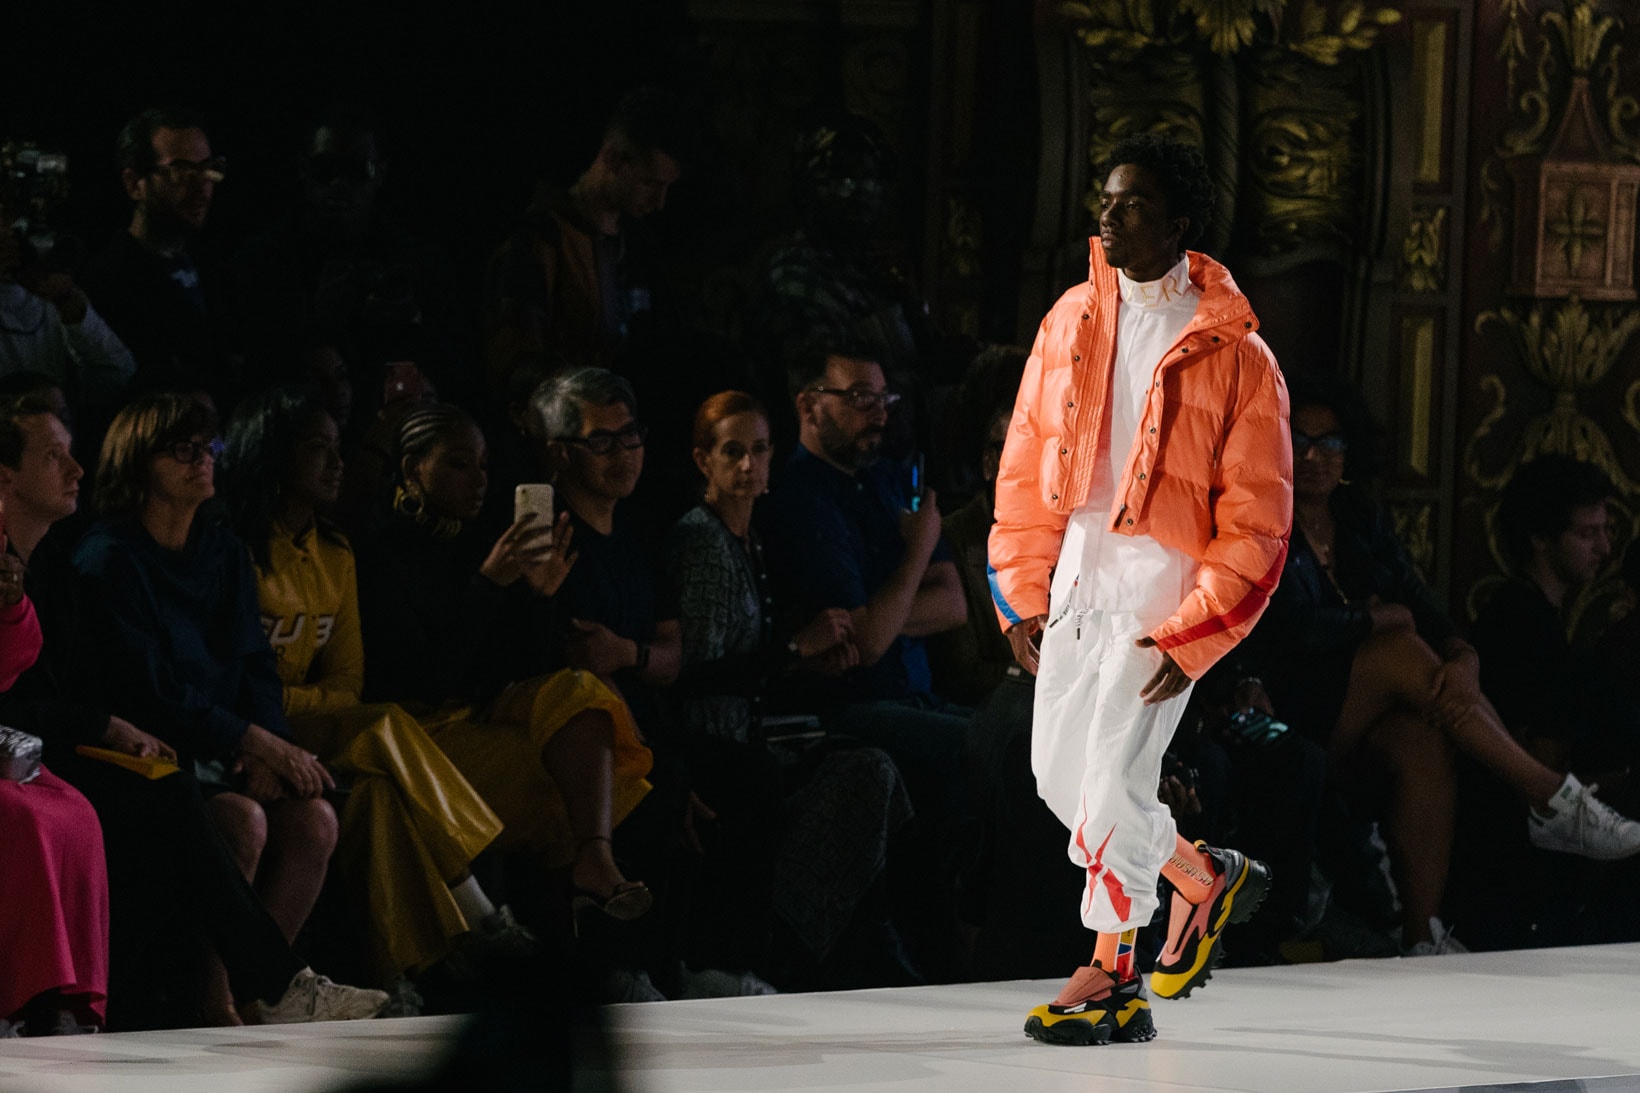 Pyer Moss Collection 3 New York Fashion Week Spring Summer 2020 Caleb McLaughlin Jacket Orange Pants White